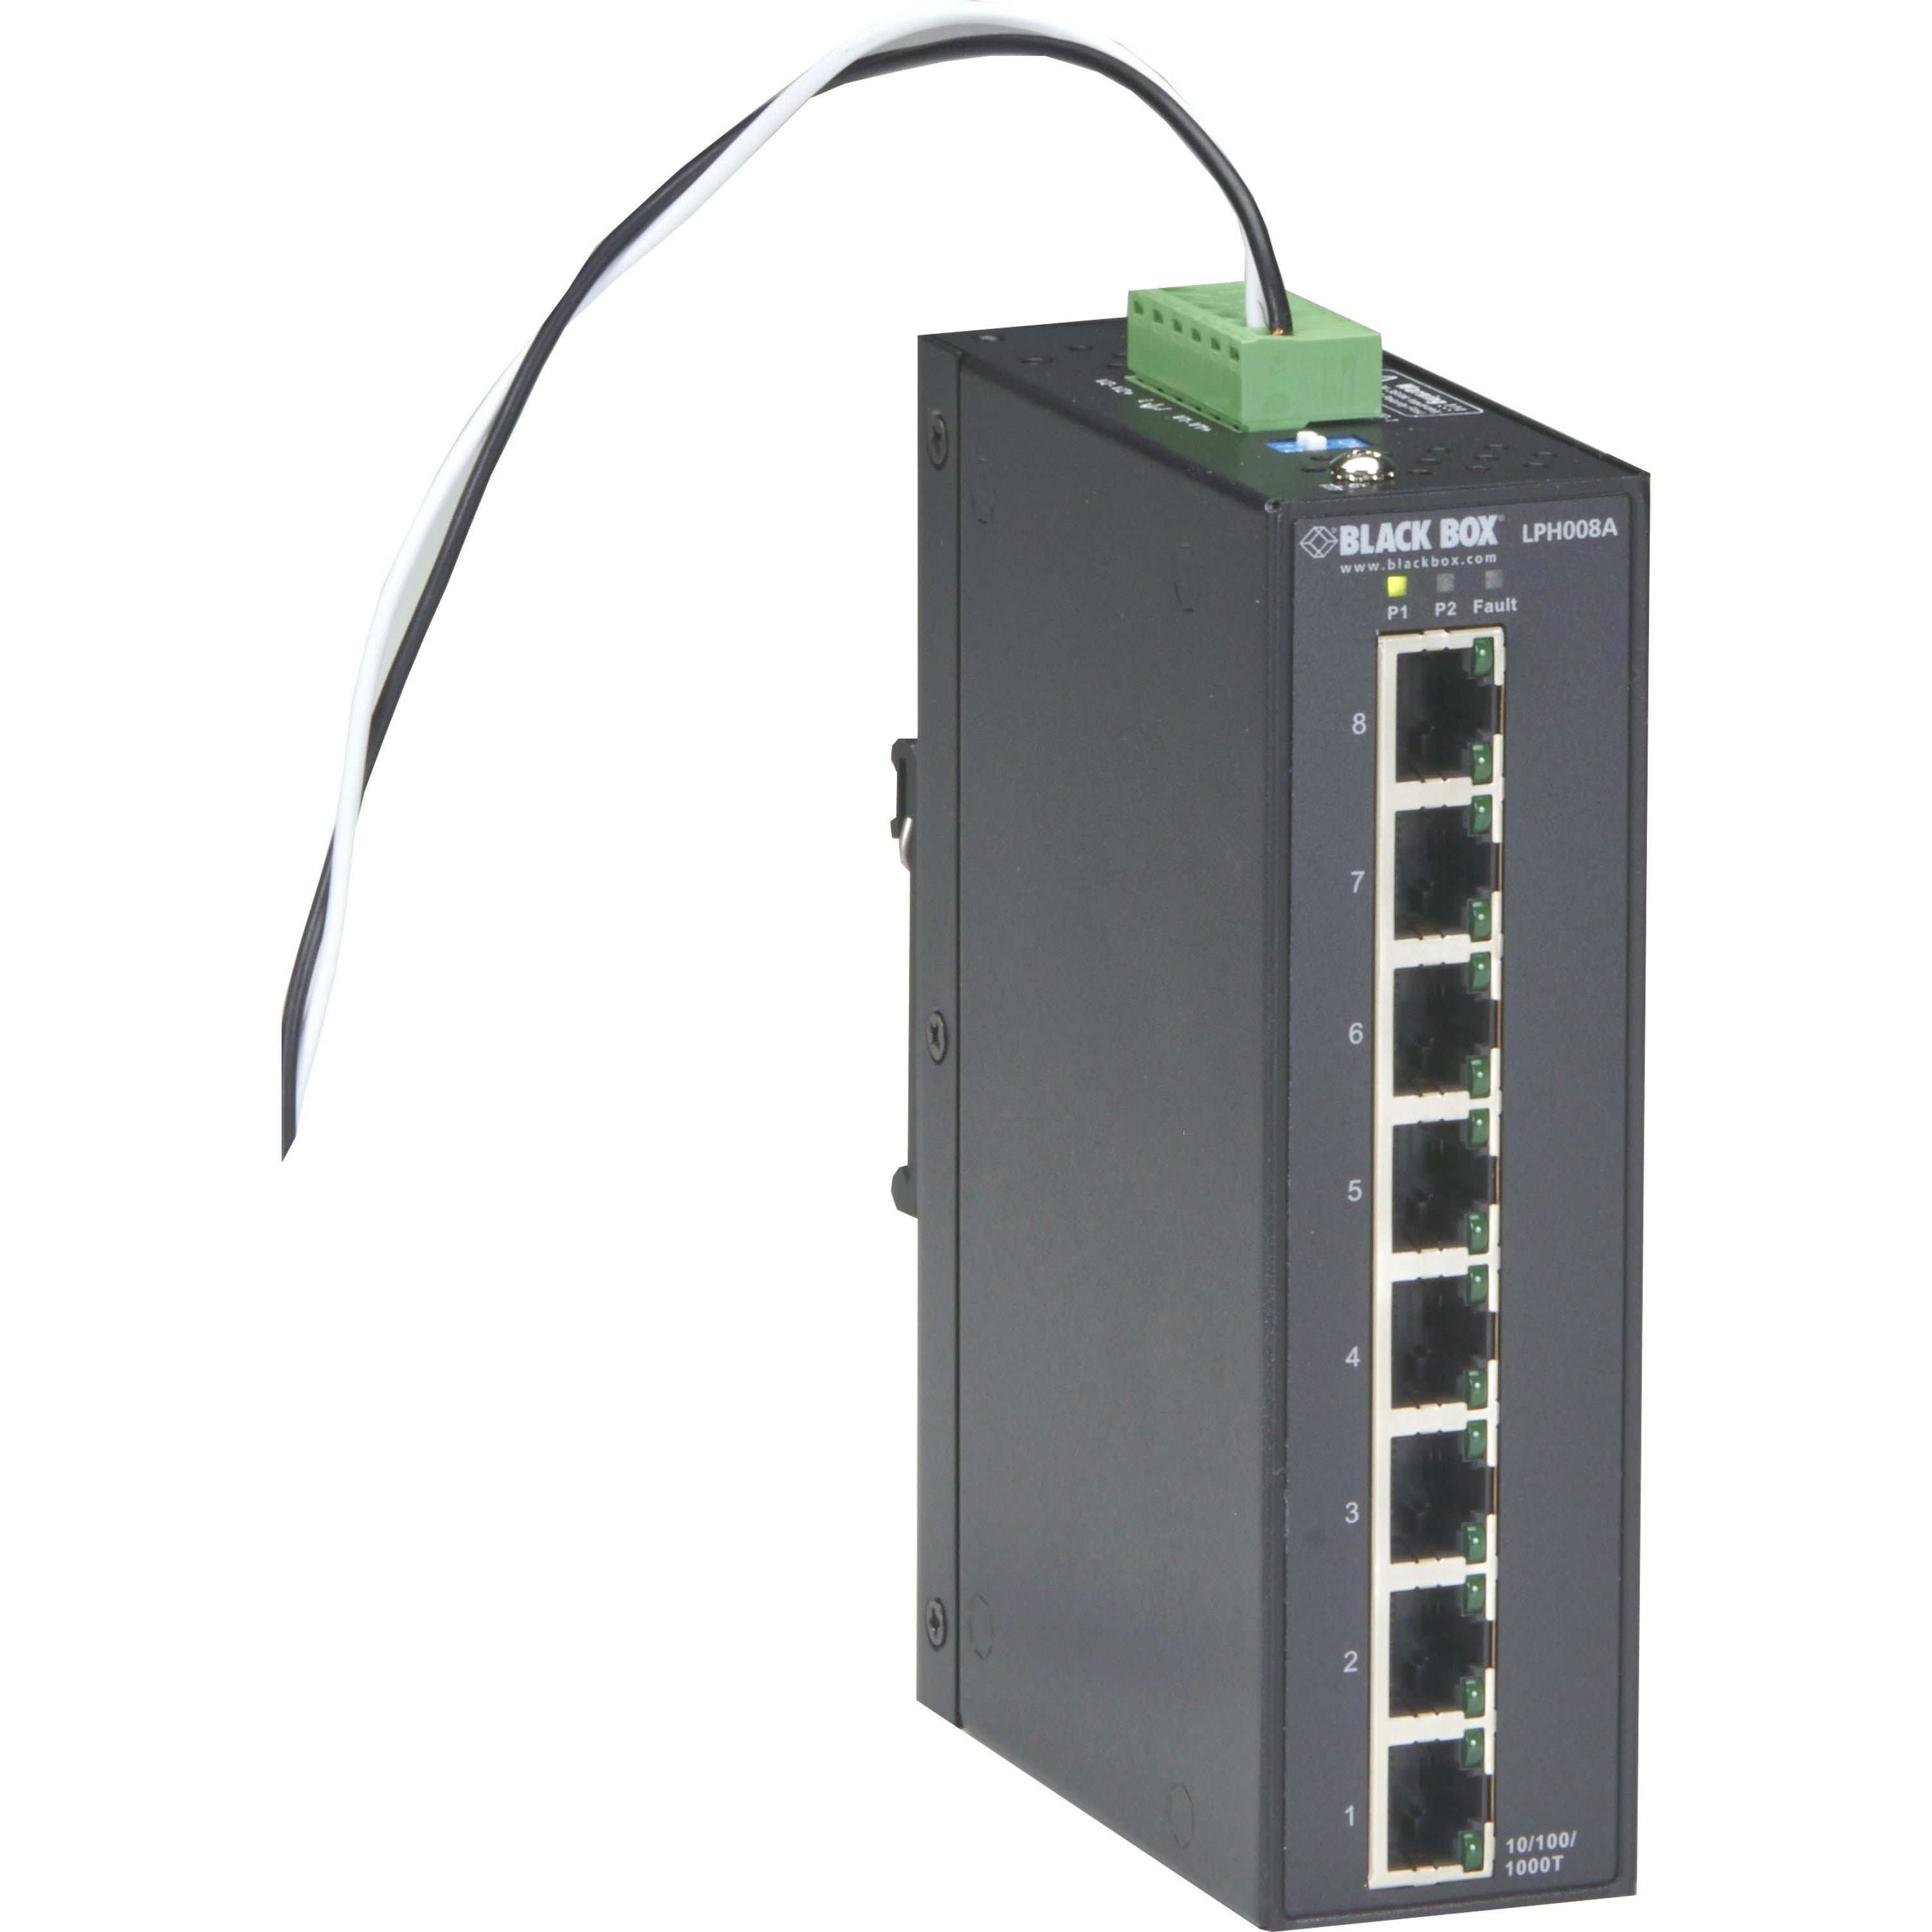 Black Box LPH008A-R2 Industrial Unmanaged Gigabit PoE+ Switch - 8-Port, TAA Compliant, 5 Year Warranty